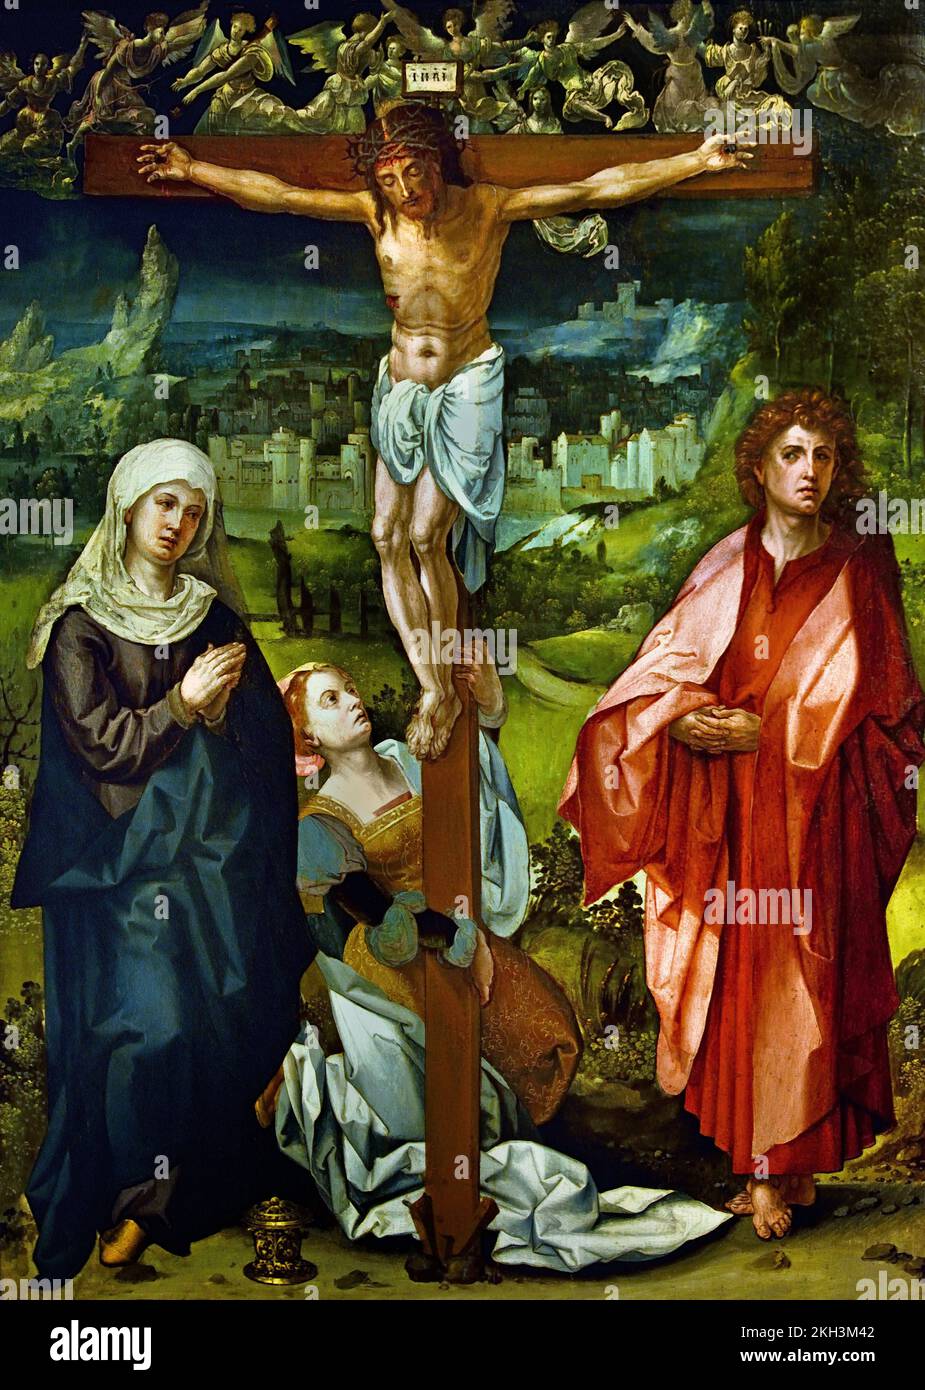 Christ on the Cross von Pieter Cock Van Aelst 16. Century Maler, Pieter Coecke van Aelst (1502-1550) Brüssel, Belgien, Flämisch, Niederlande, Niederländisch, Stockfoto